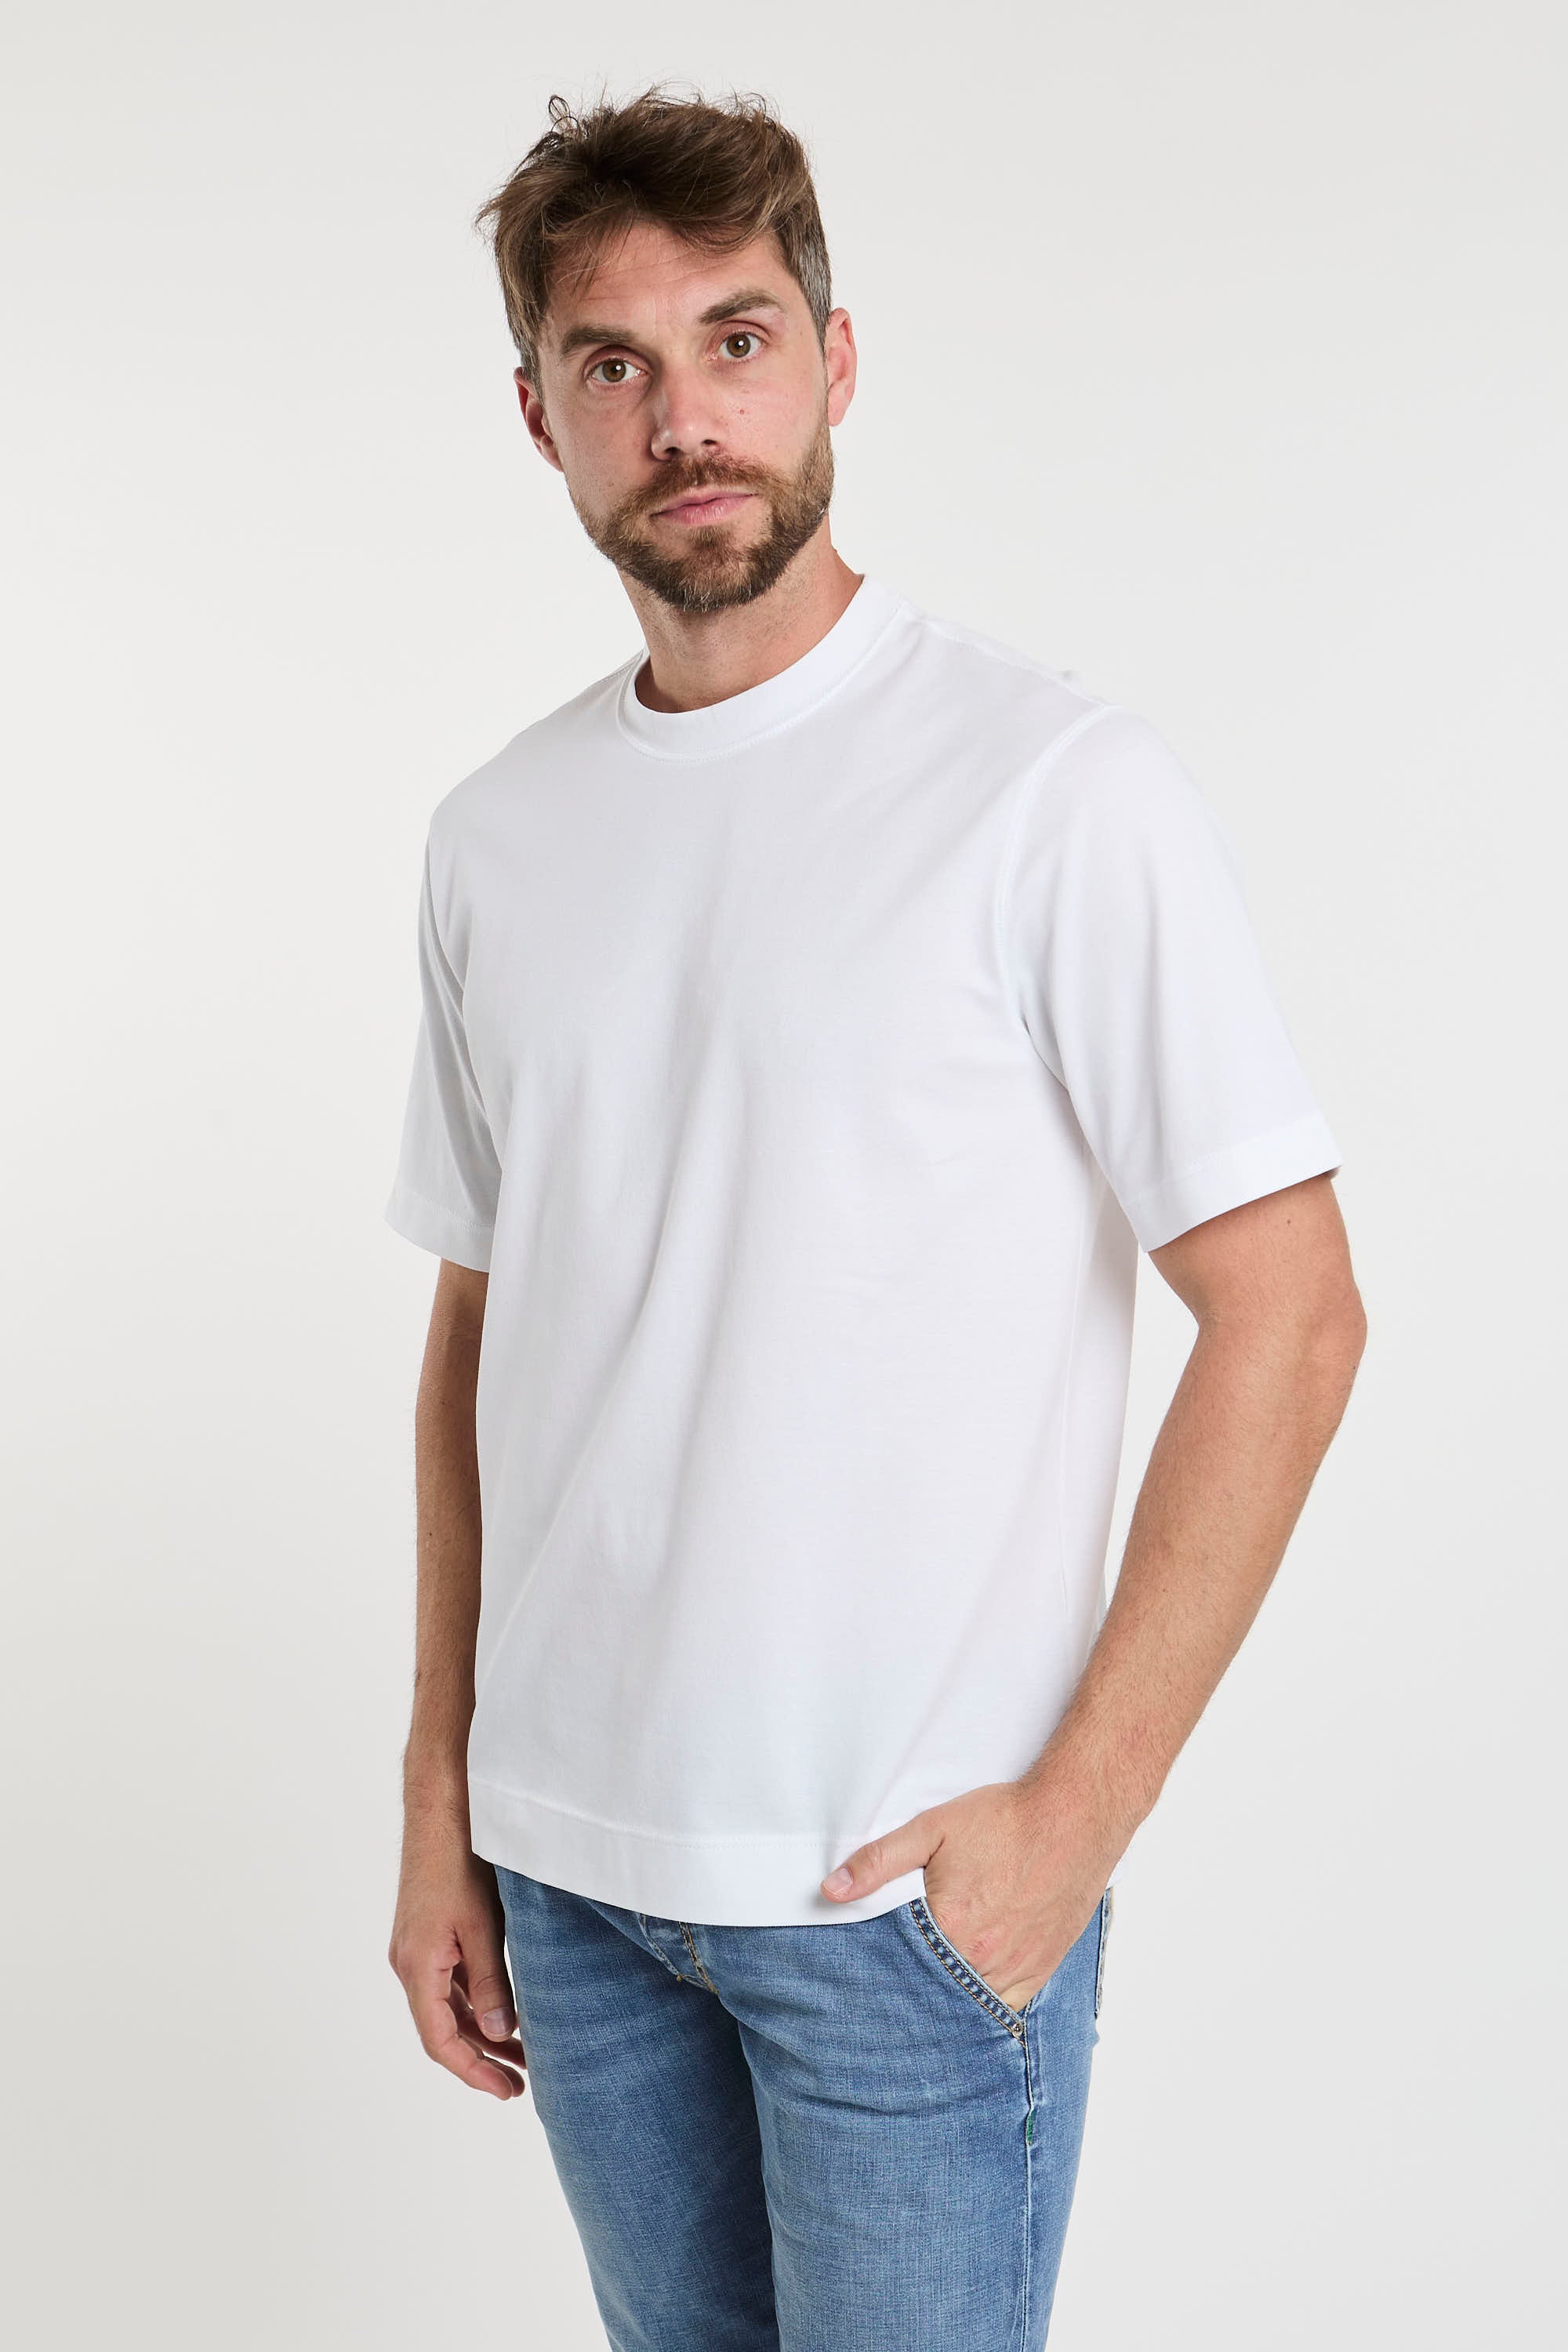 Circolo 1901 T-Shirt Baumwolle Weiß 6505-5